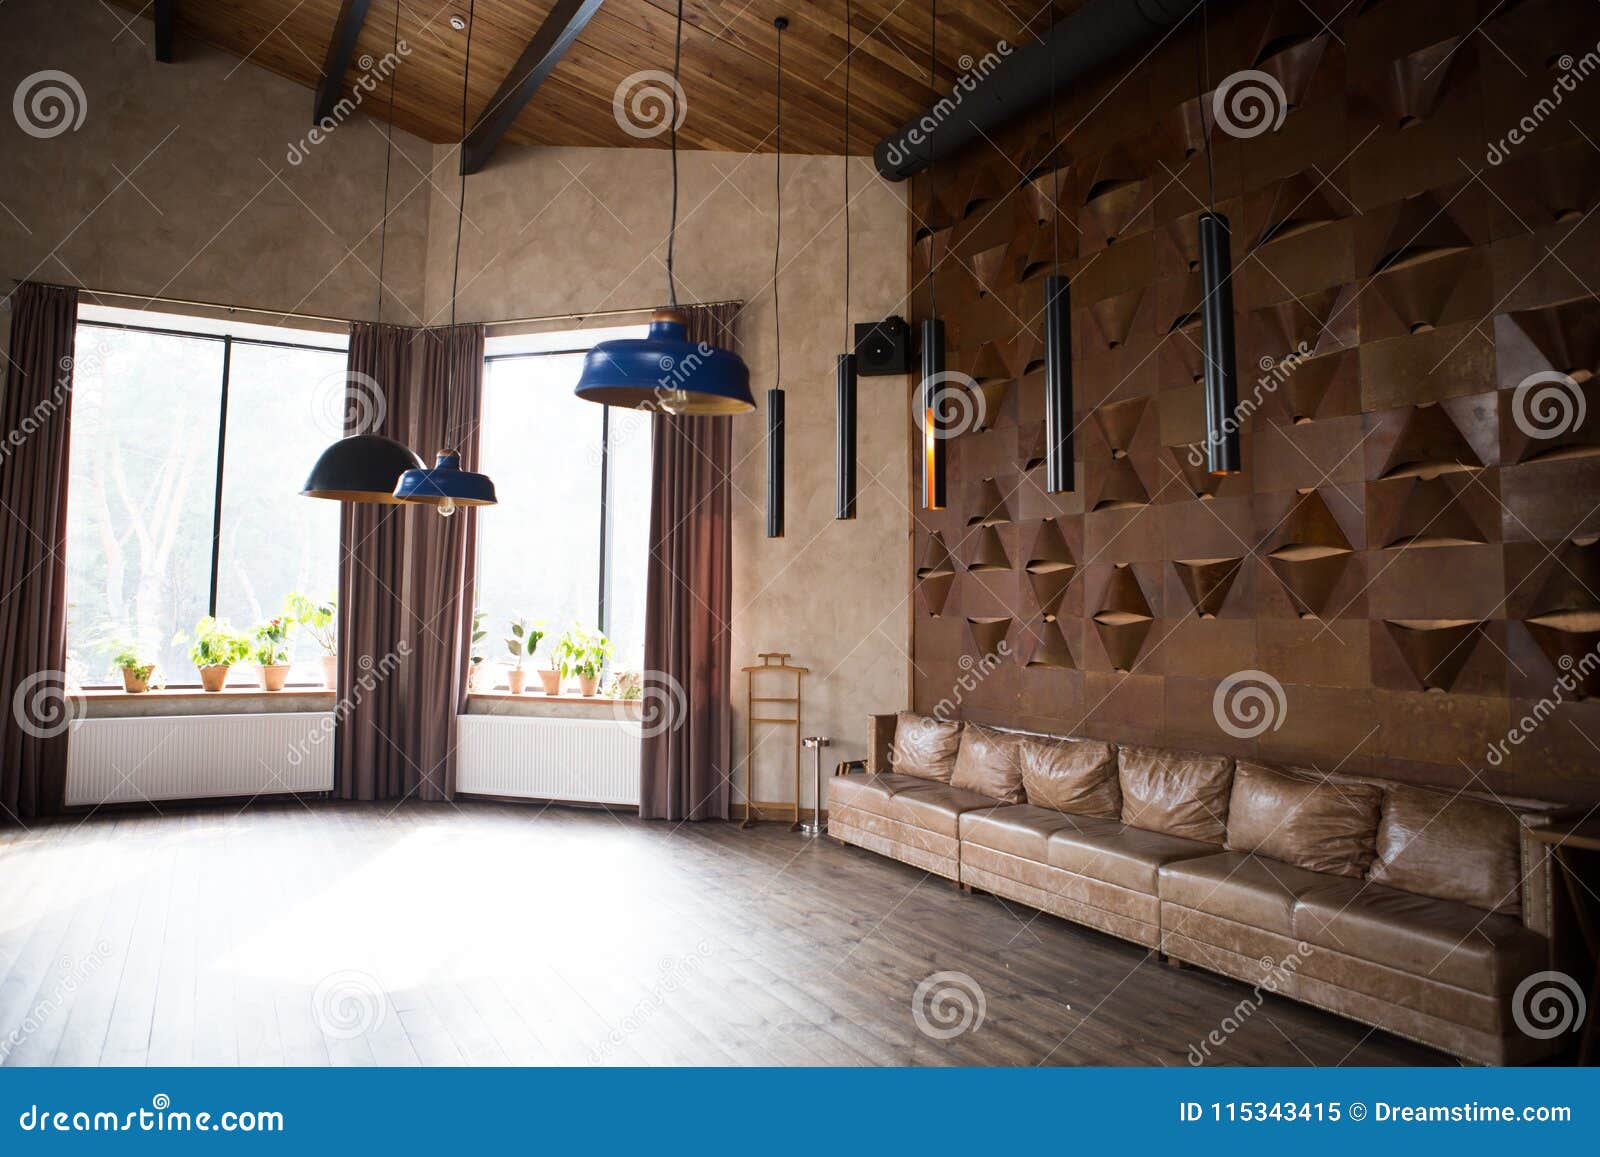 Interior In Loft Style High Ceilings Large Windows Loft